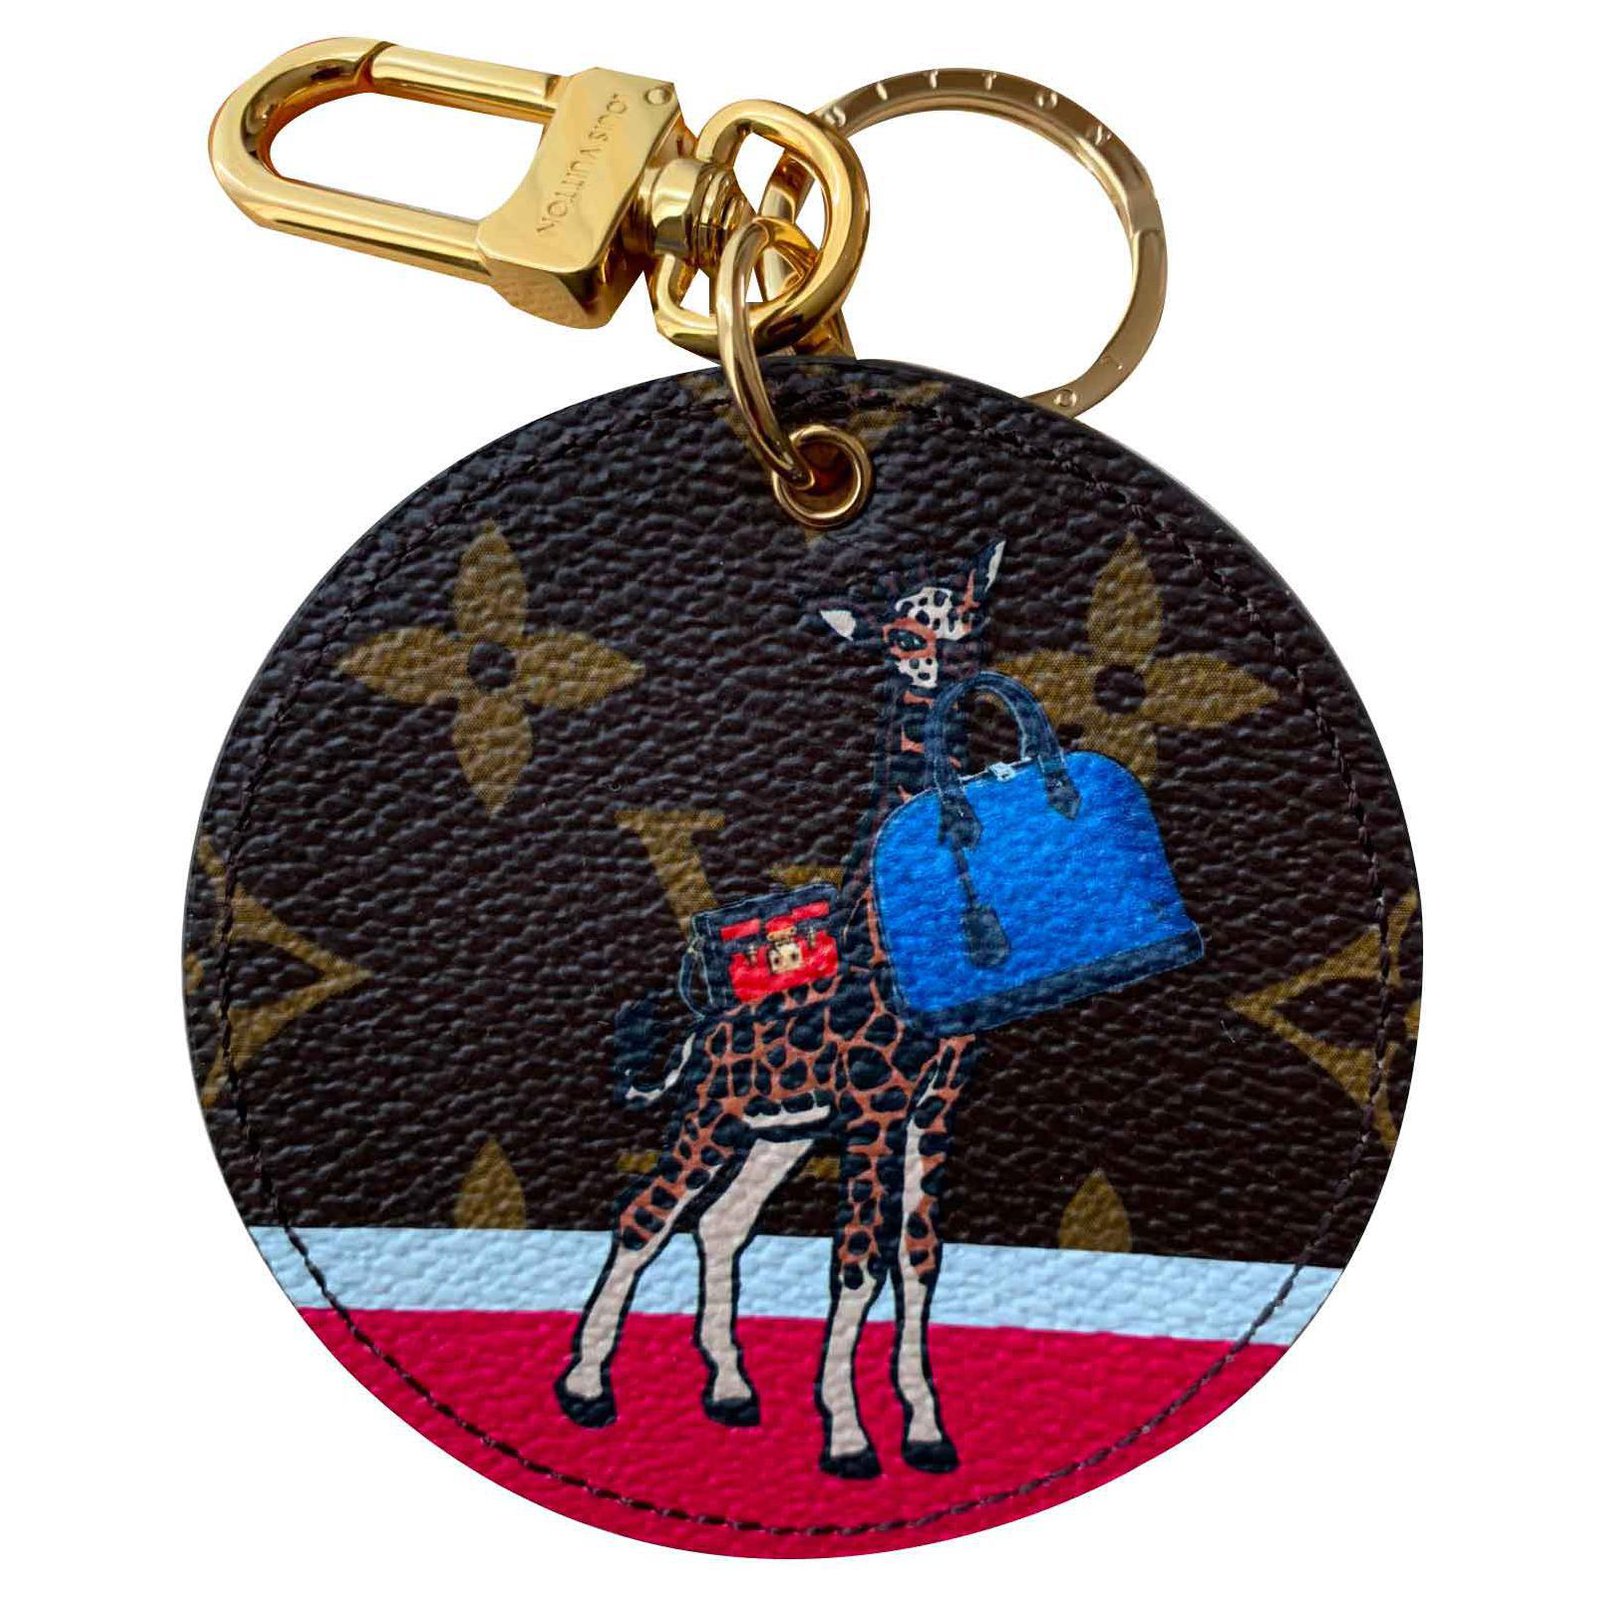 Louis Vuitton Monogram Canvas Illustre Giraffe Key Holder and Bag